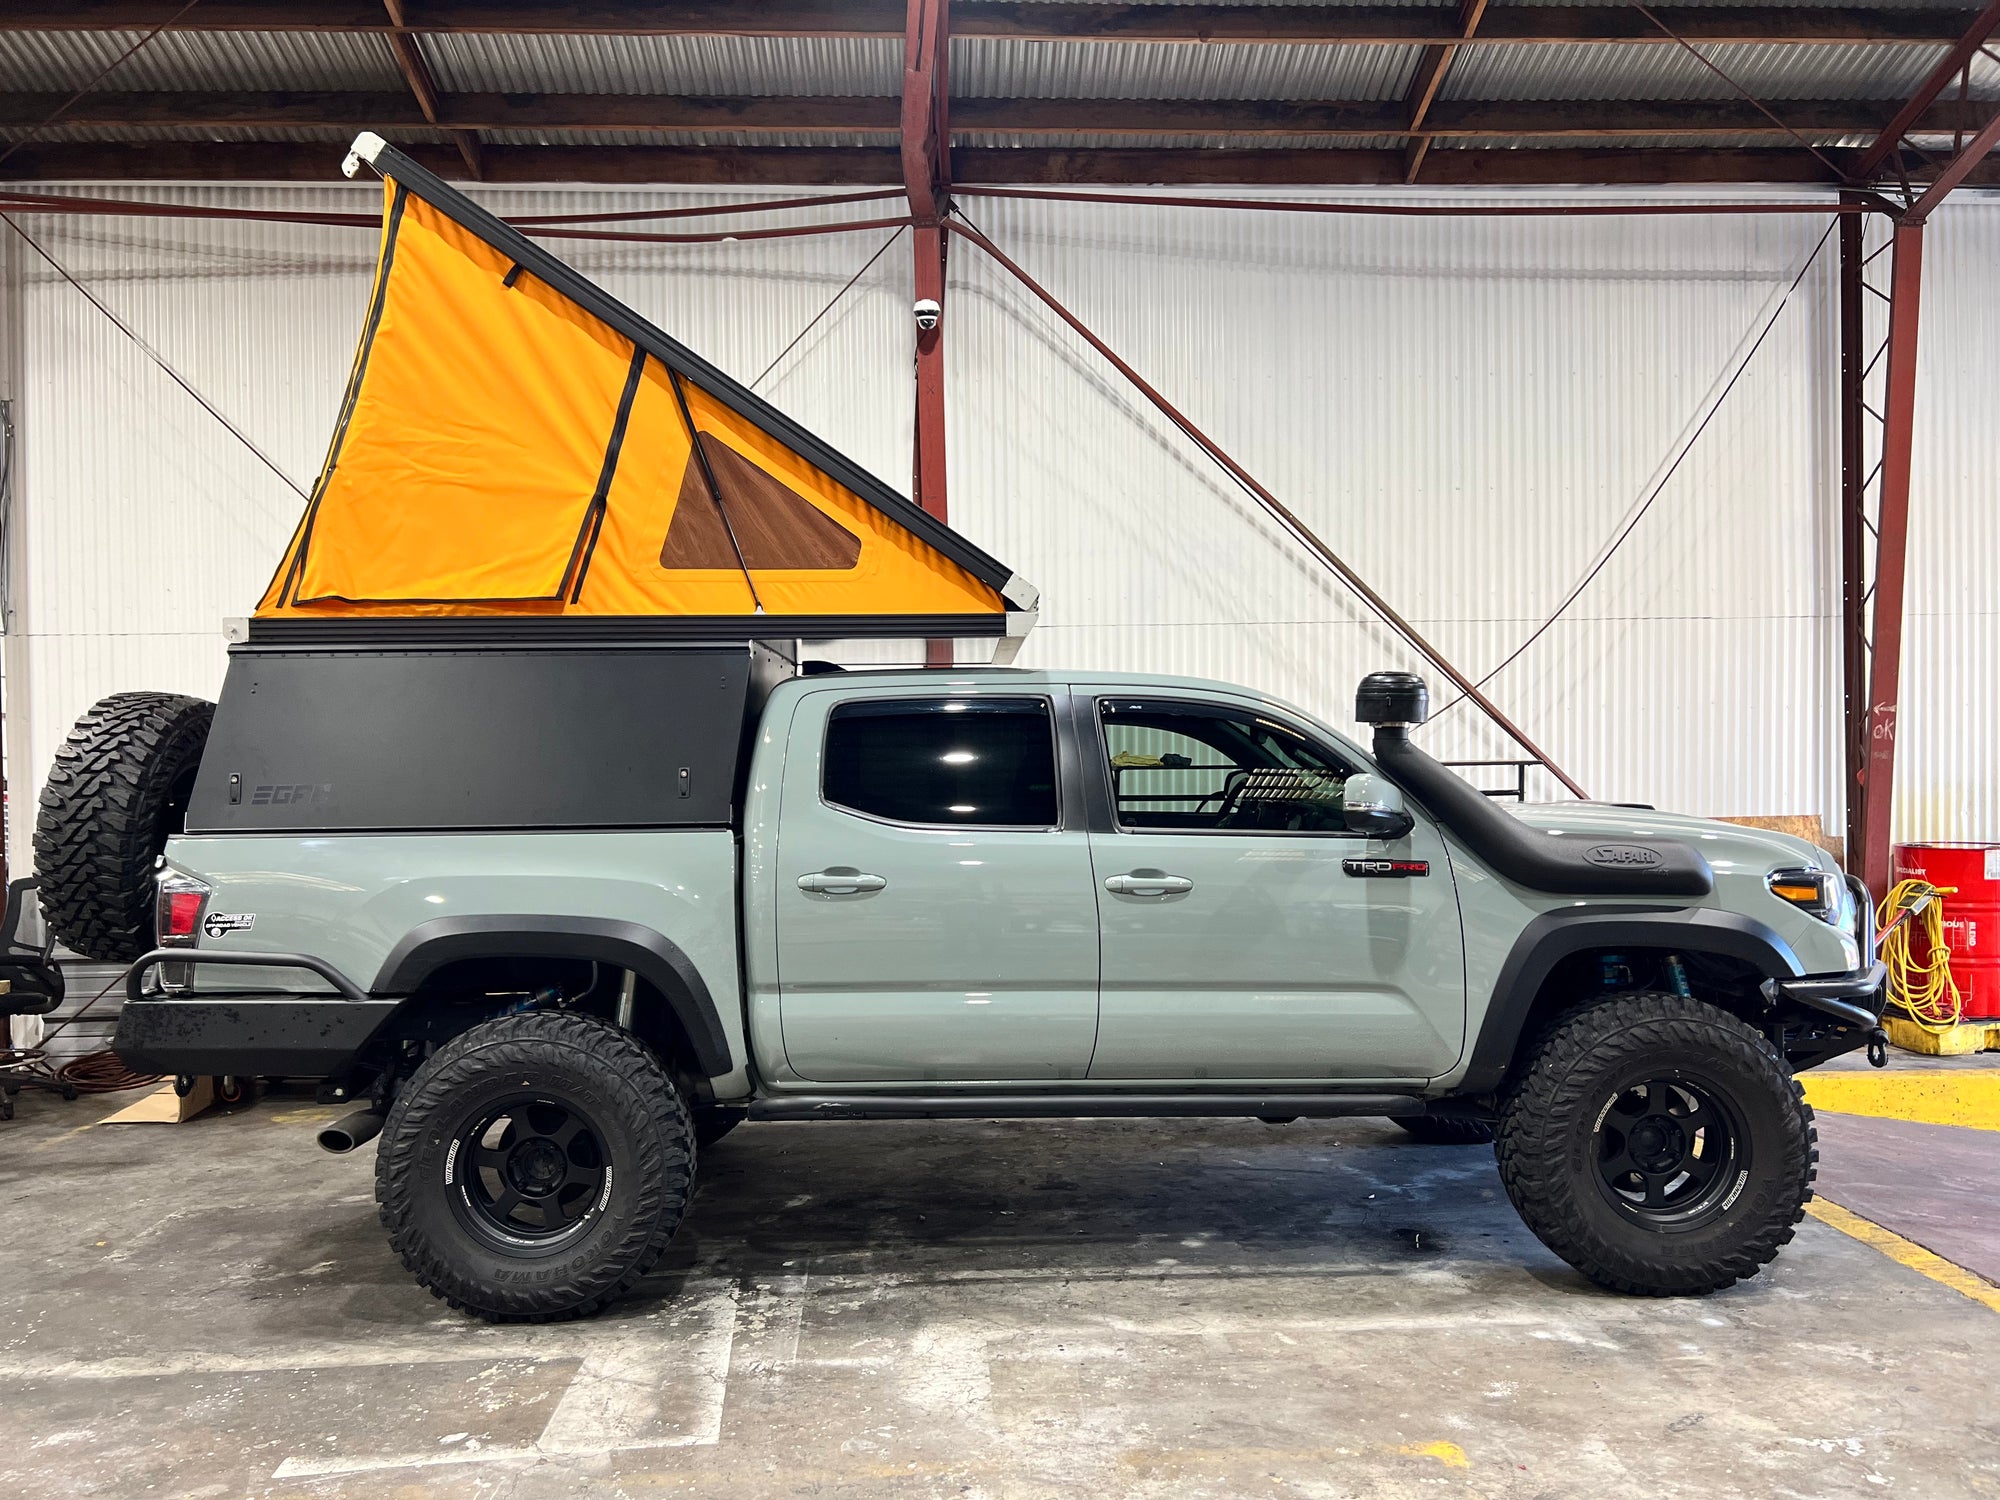 2021 Toyota Tacoma Camper - Build #4428